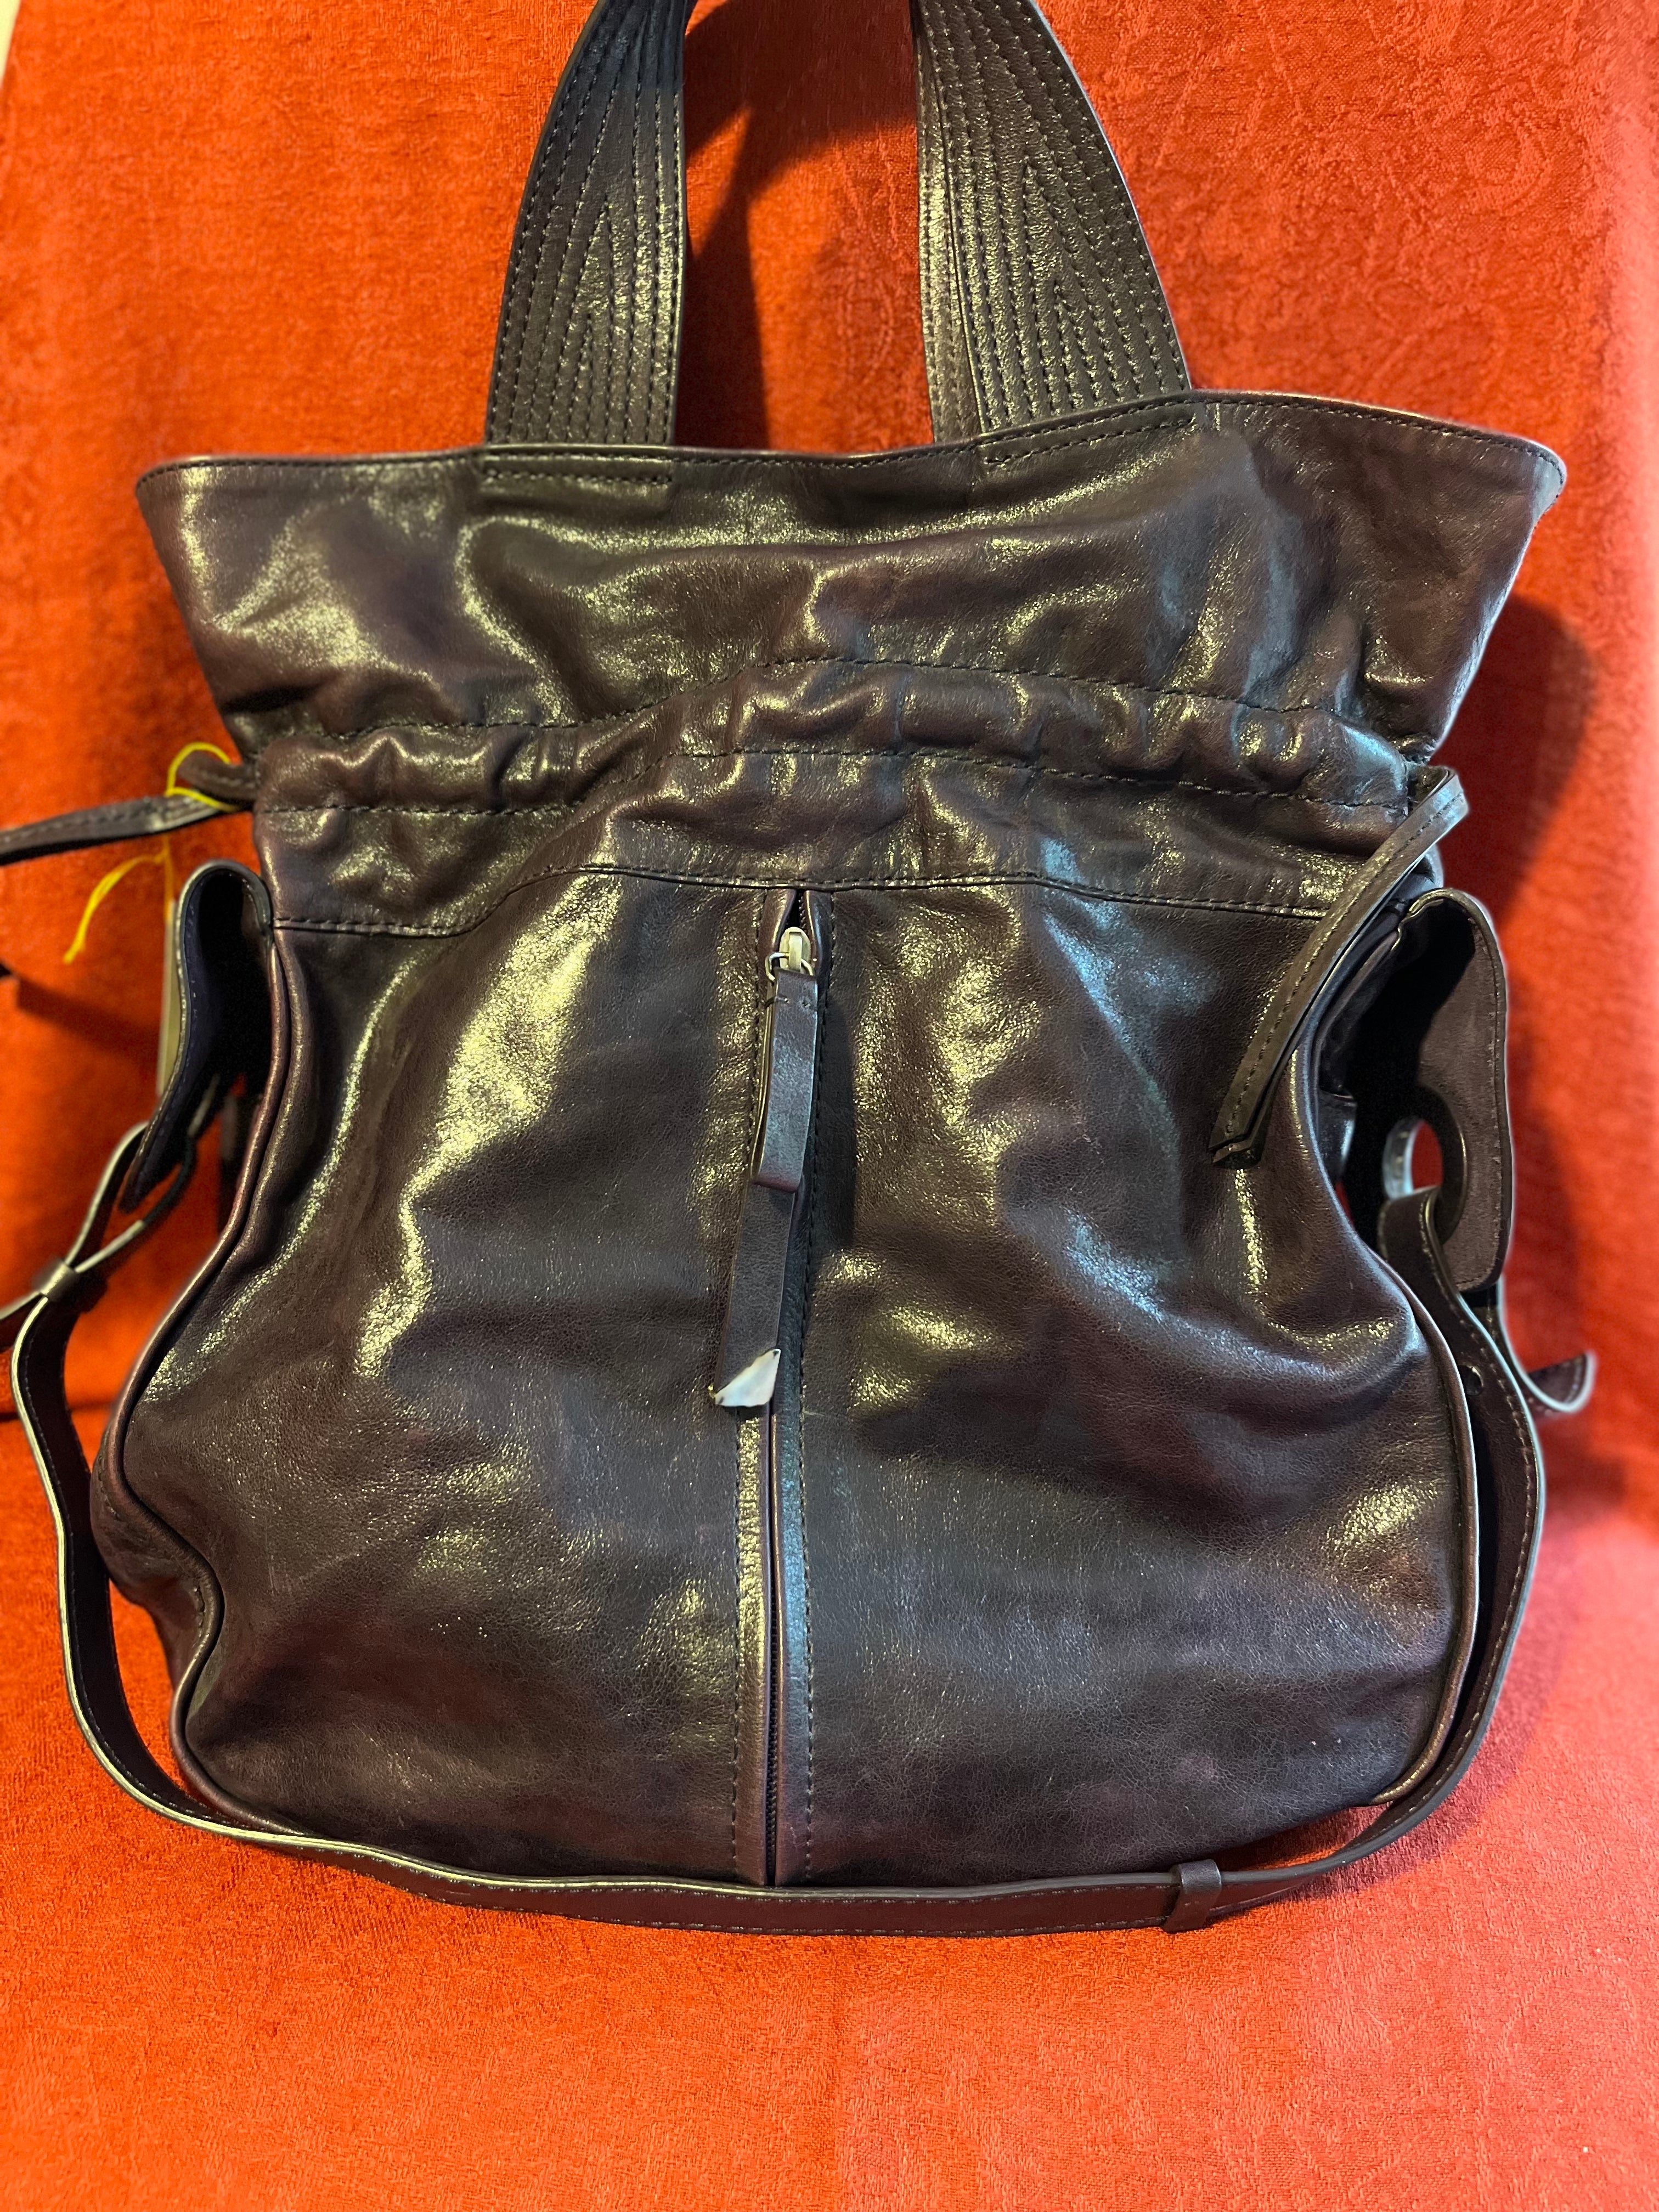 Vintage & second hand Francesco Biasia bags | The Next Closet